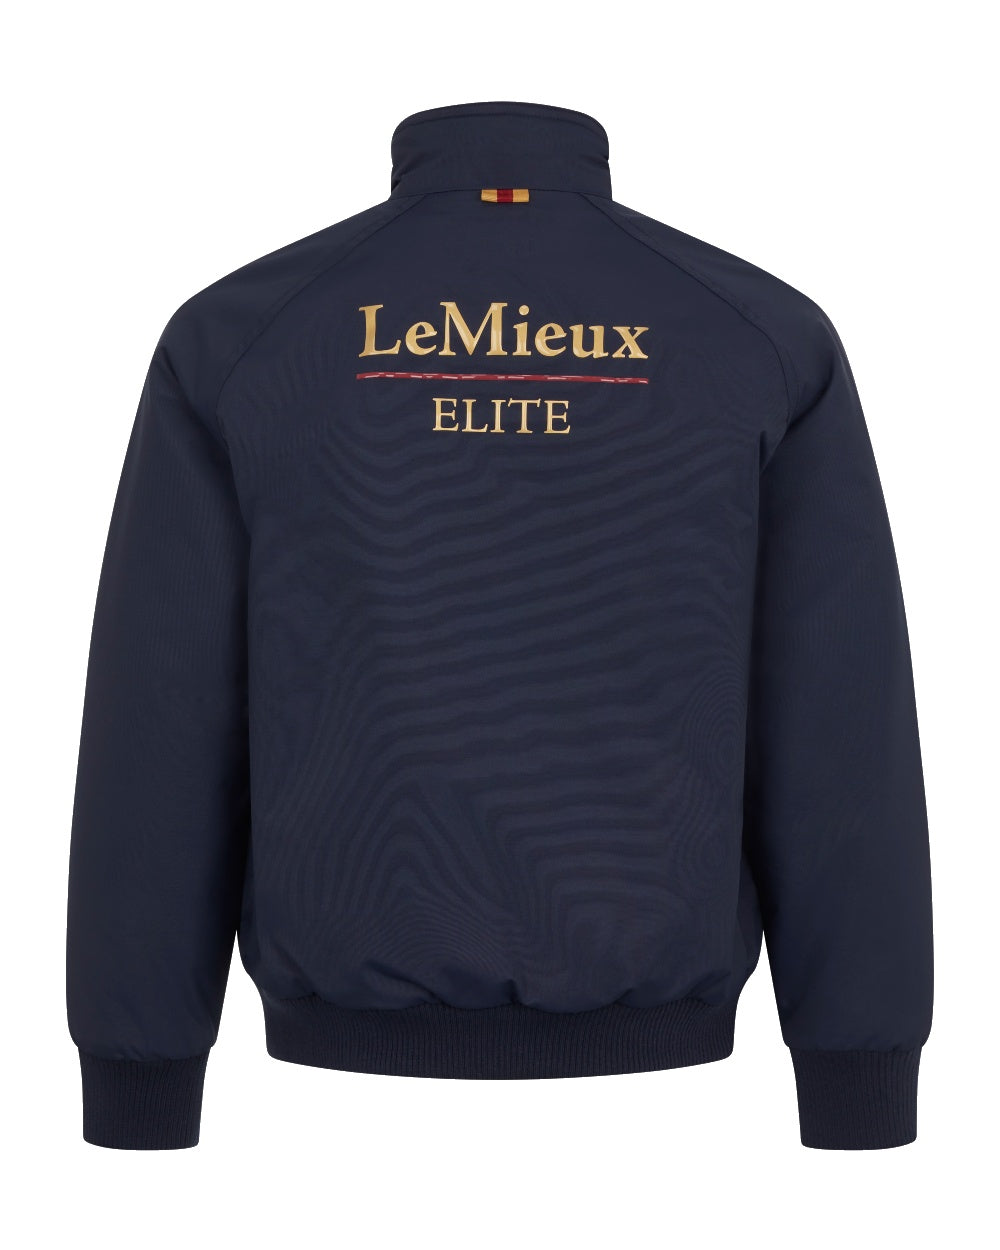 Navy coloured LeMieux Mini Elite Team Jacket on white background 